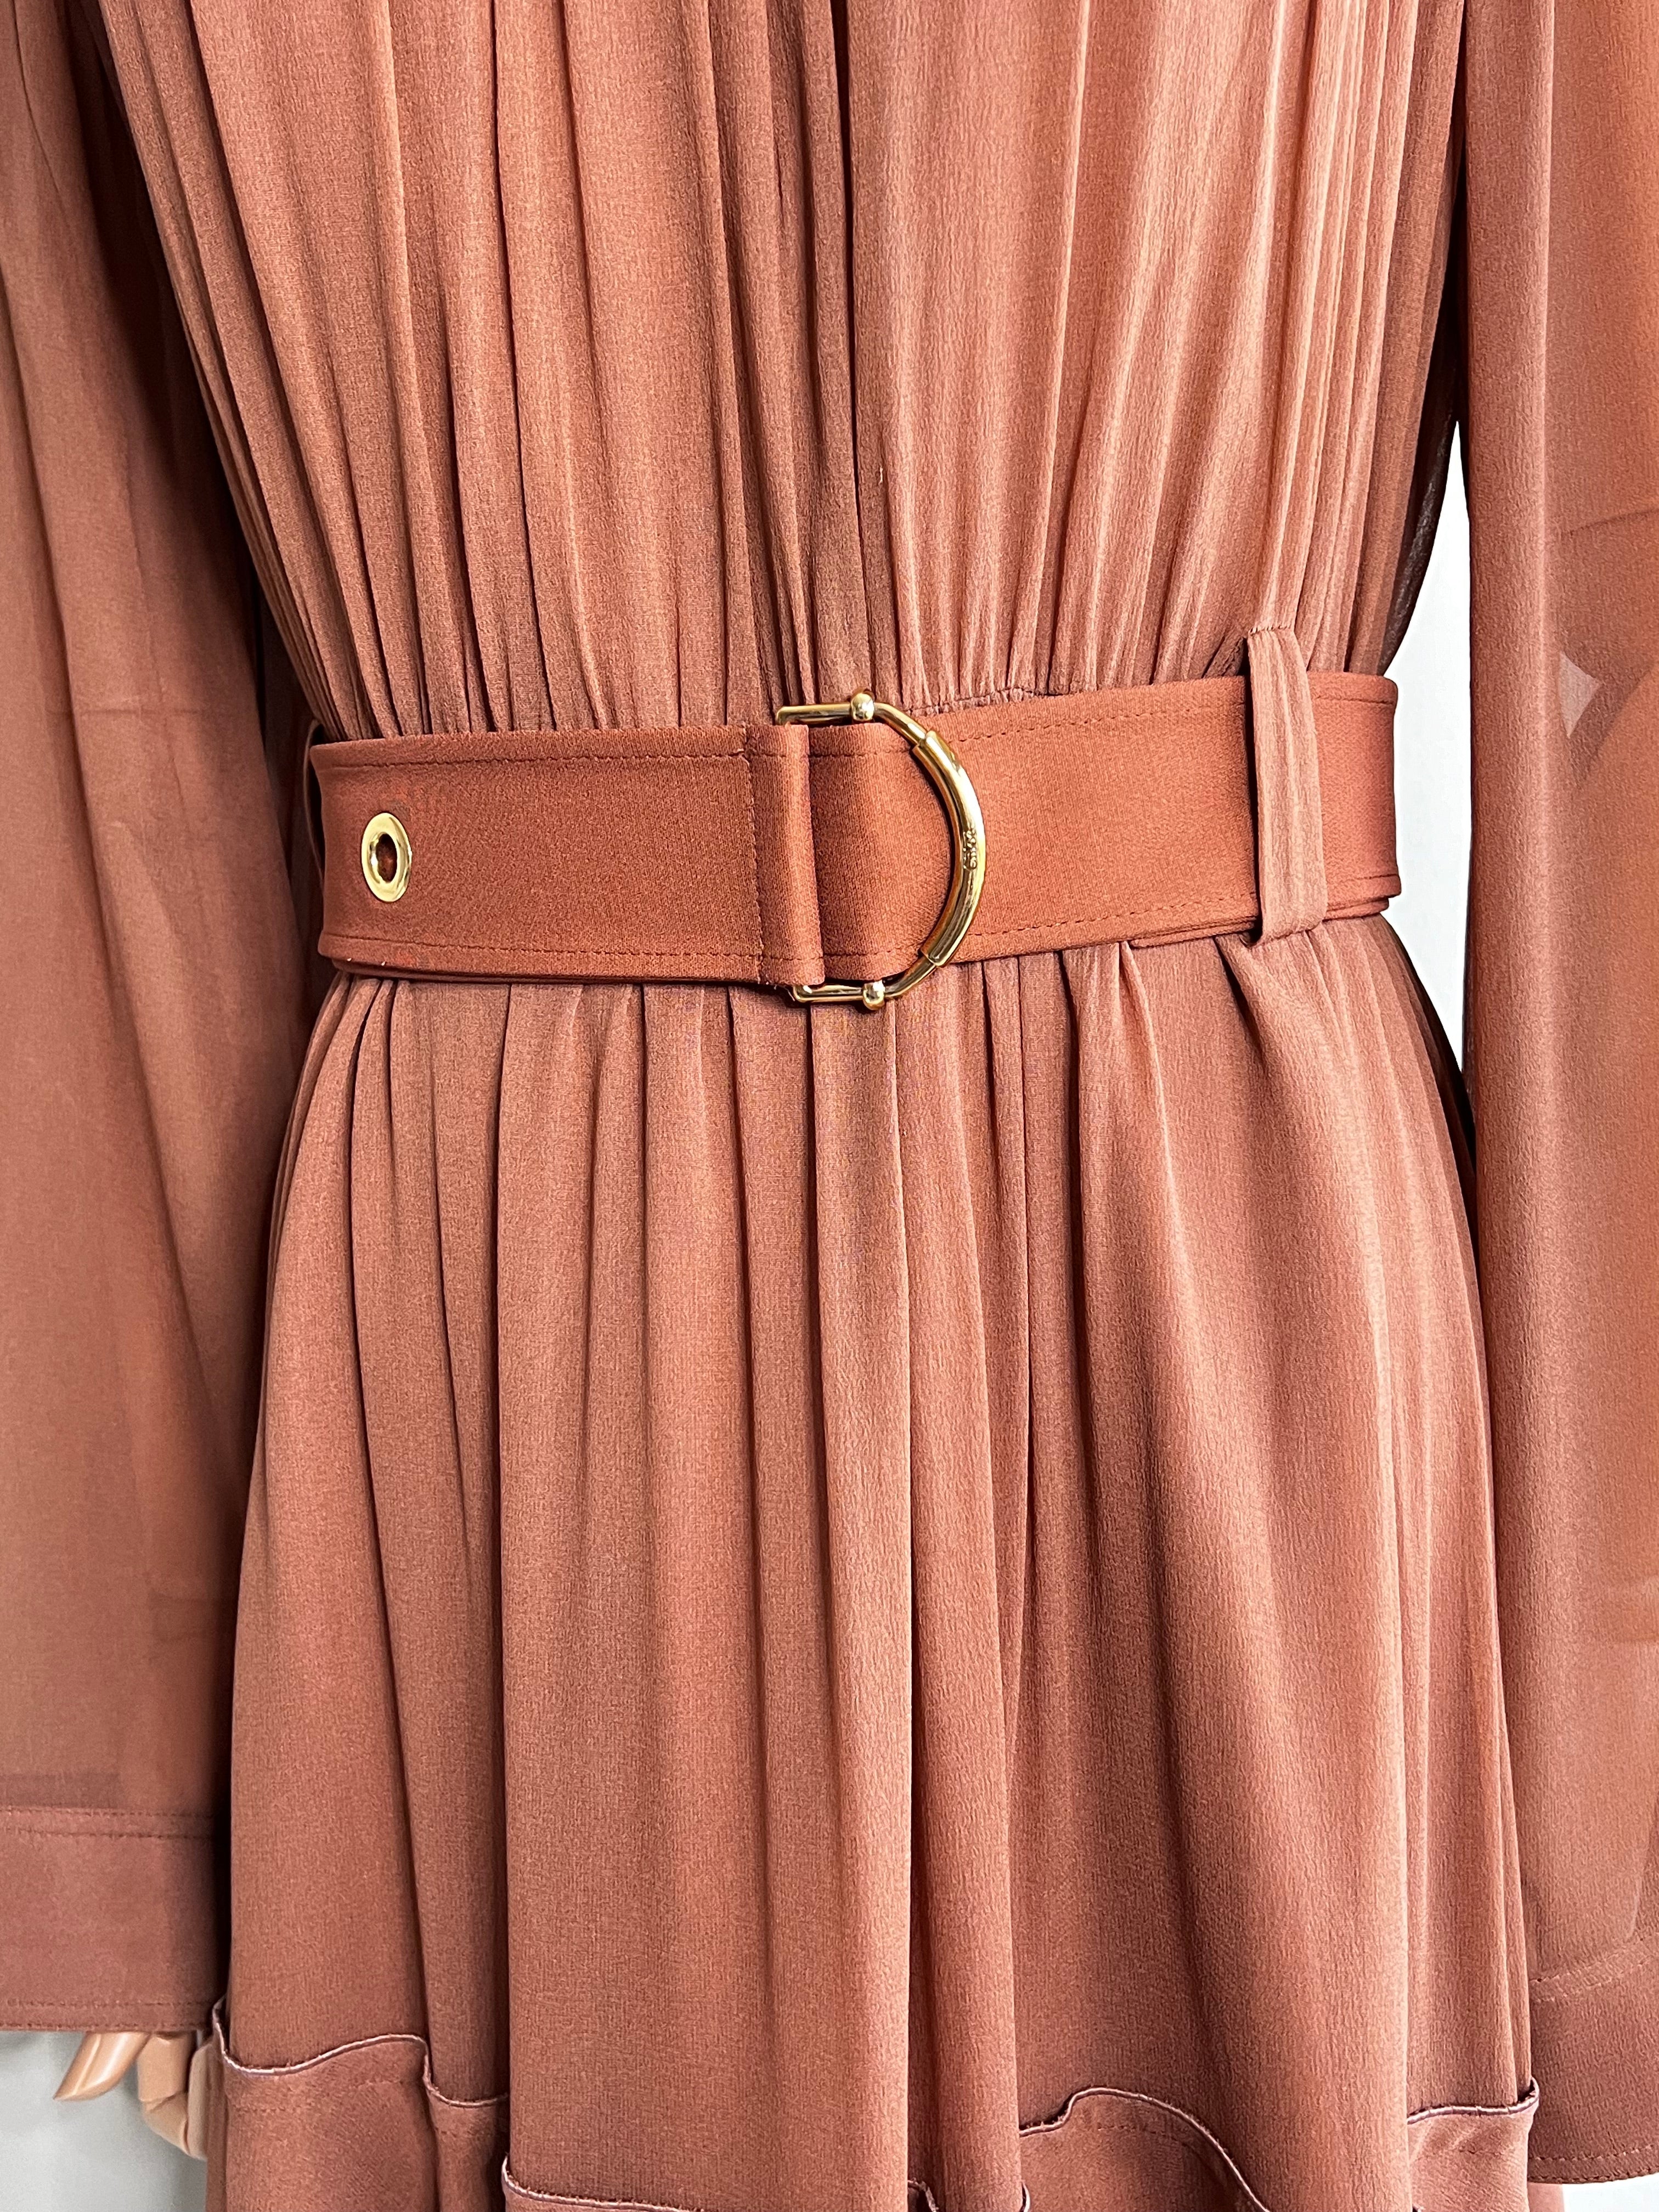 Brown belted mousseline and silk crepe longsleeve dress - CHLOE